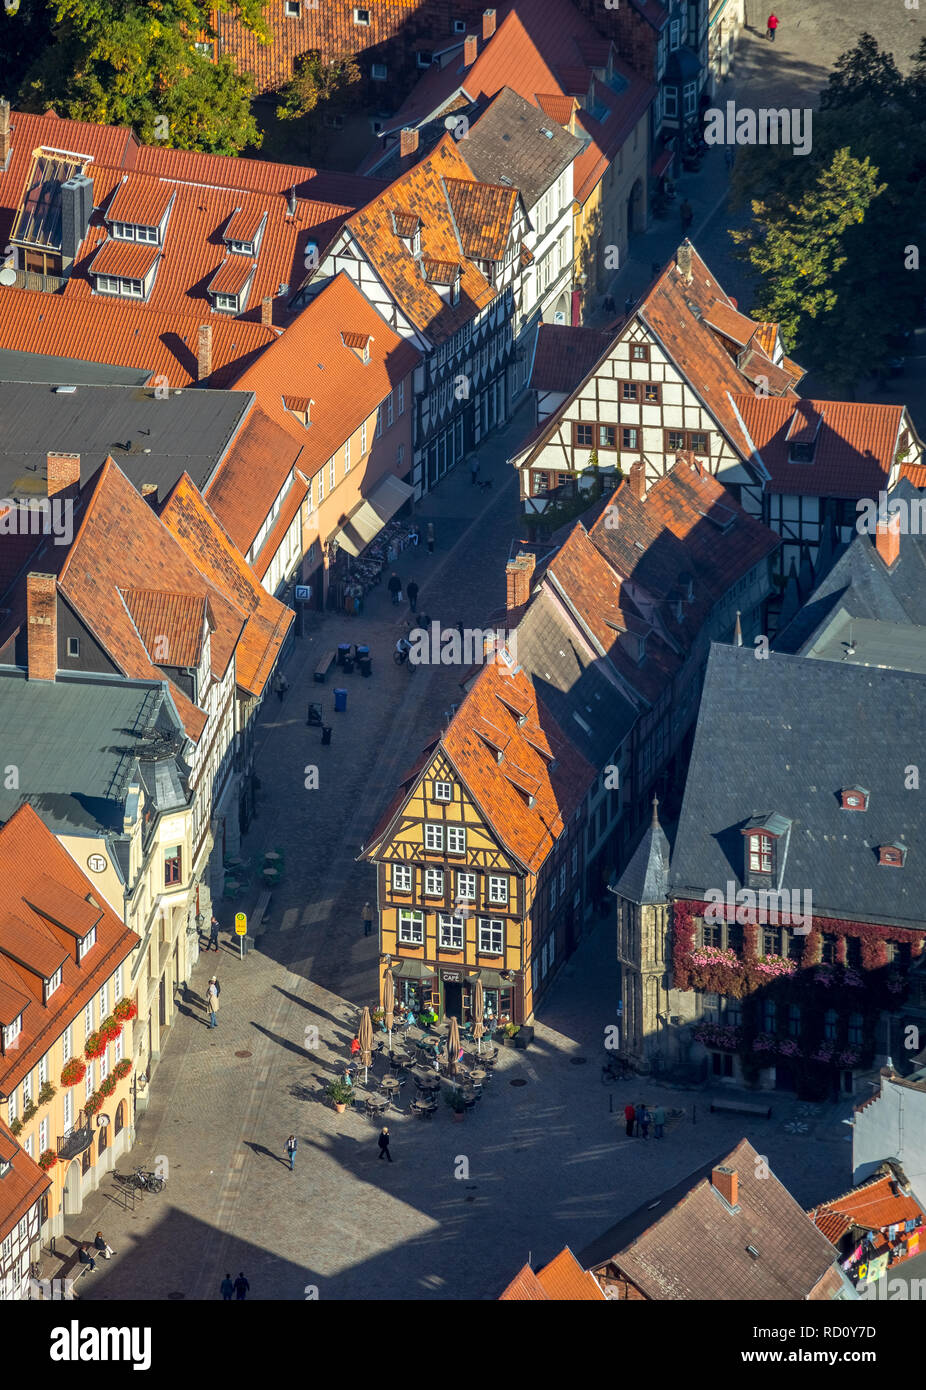 Vista aérea, Goetzsches Mausoleo, iglesia del mercado Stankt Benediktii, Marktkirchhof, Quedlinburg-Altstadt, Quedlinburg, distrito de Harz, en el Estado federado de Sajonia-Anhalt, Ge Foto de stock